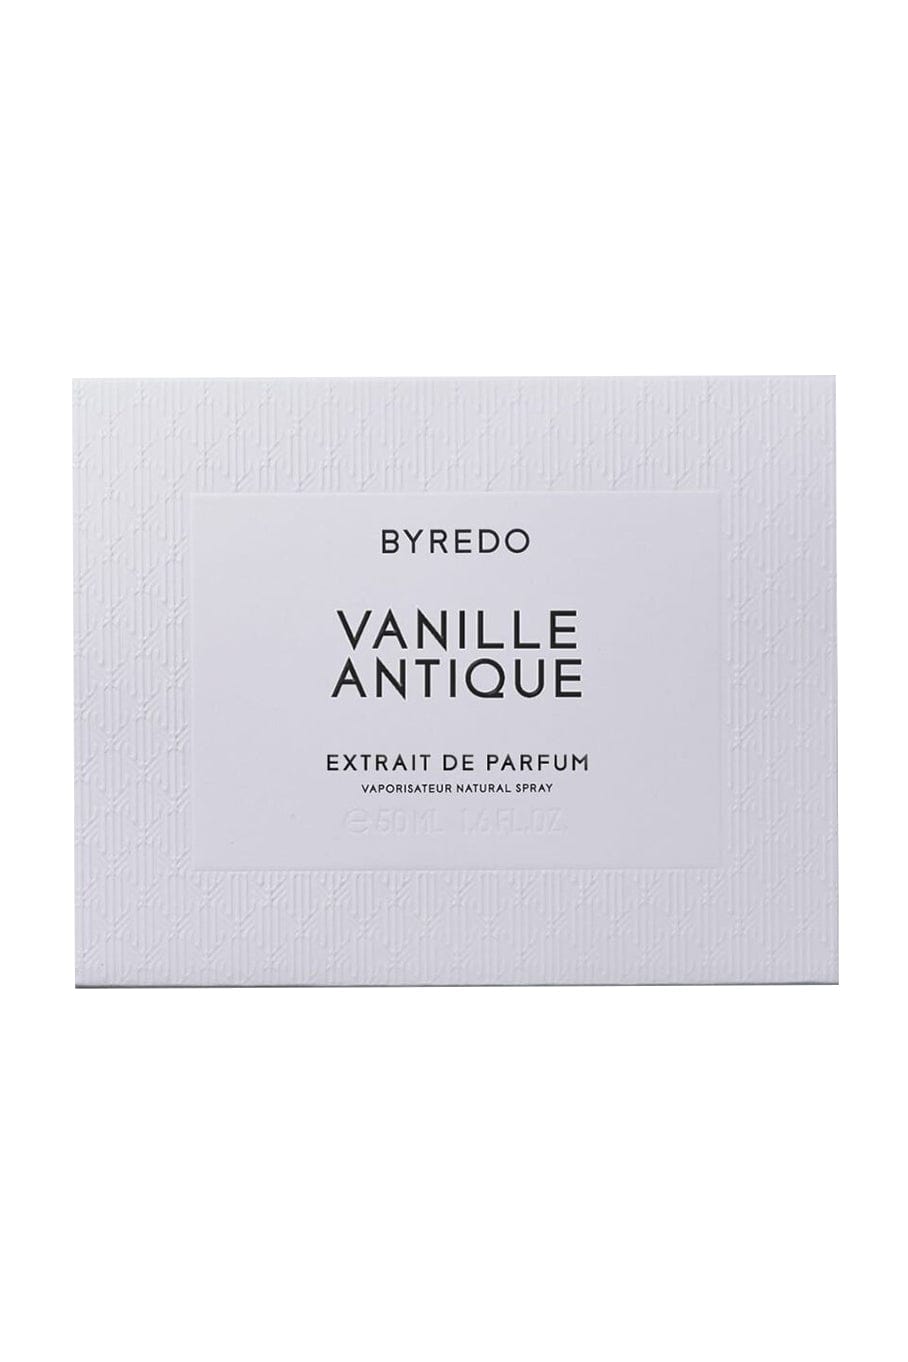 Vanilla Antique Perfume Extract BEAUTYFRAGRAN BYREDO   